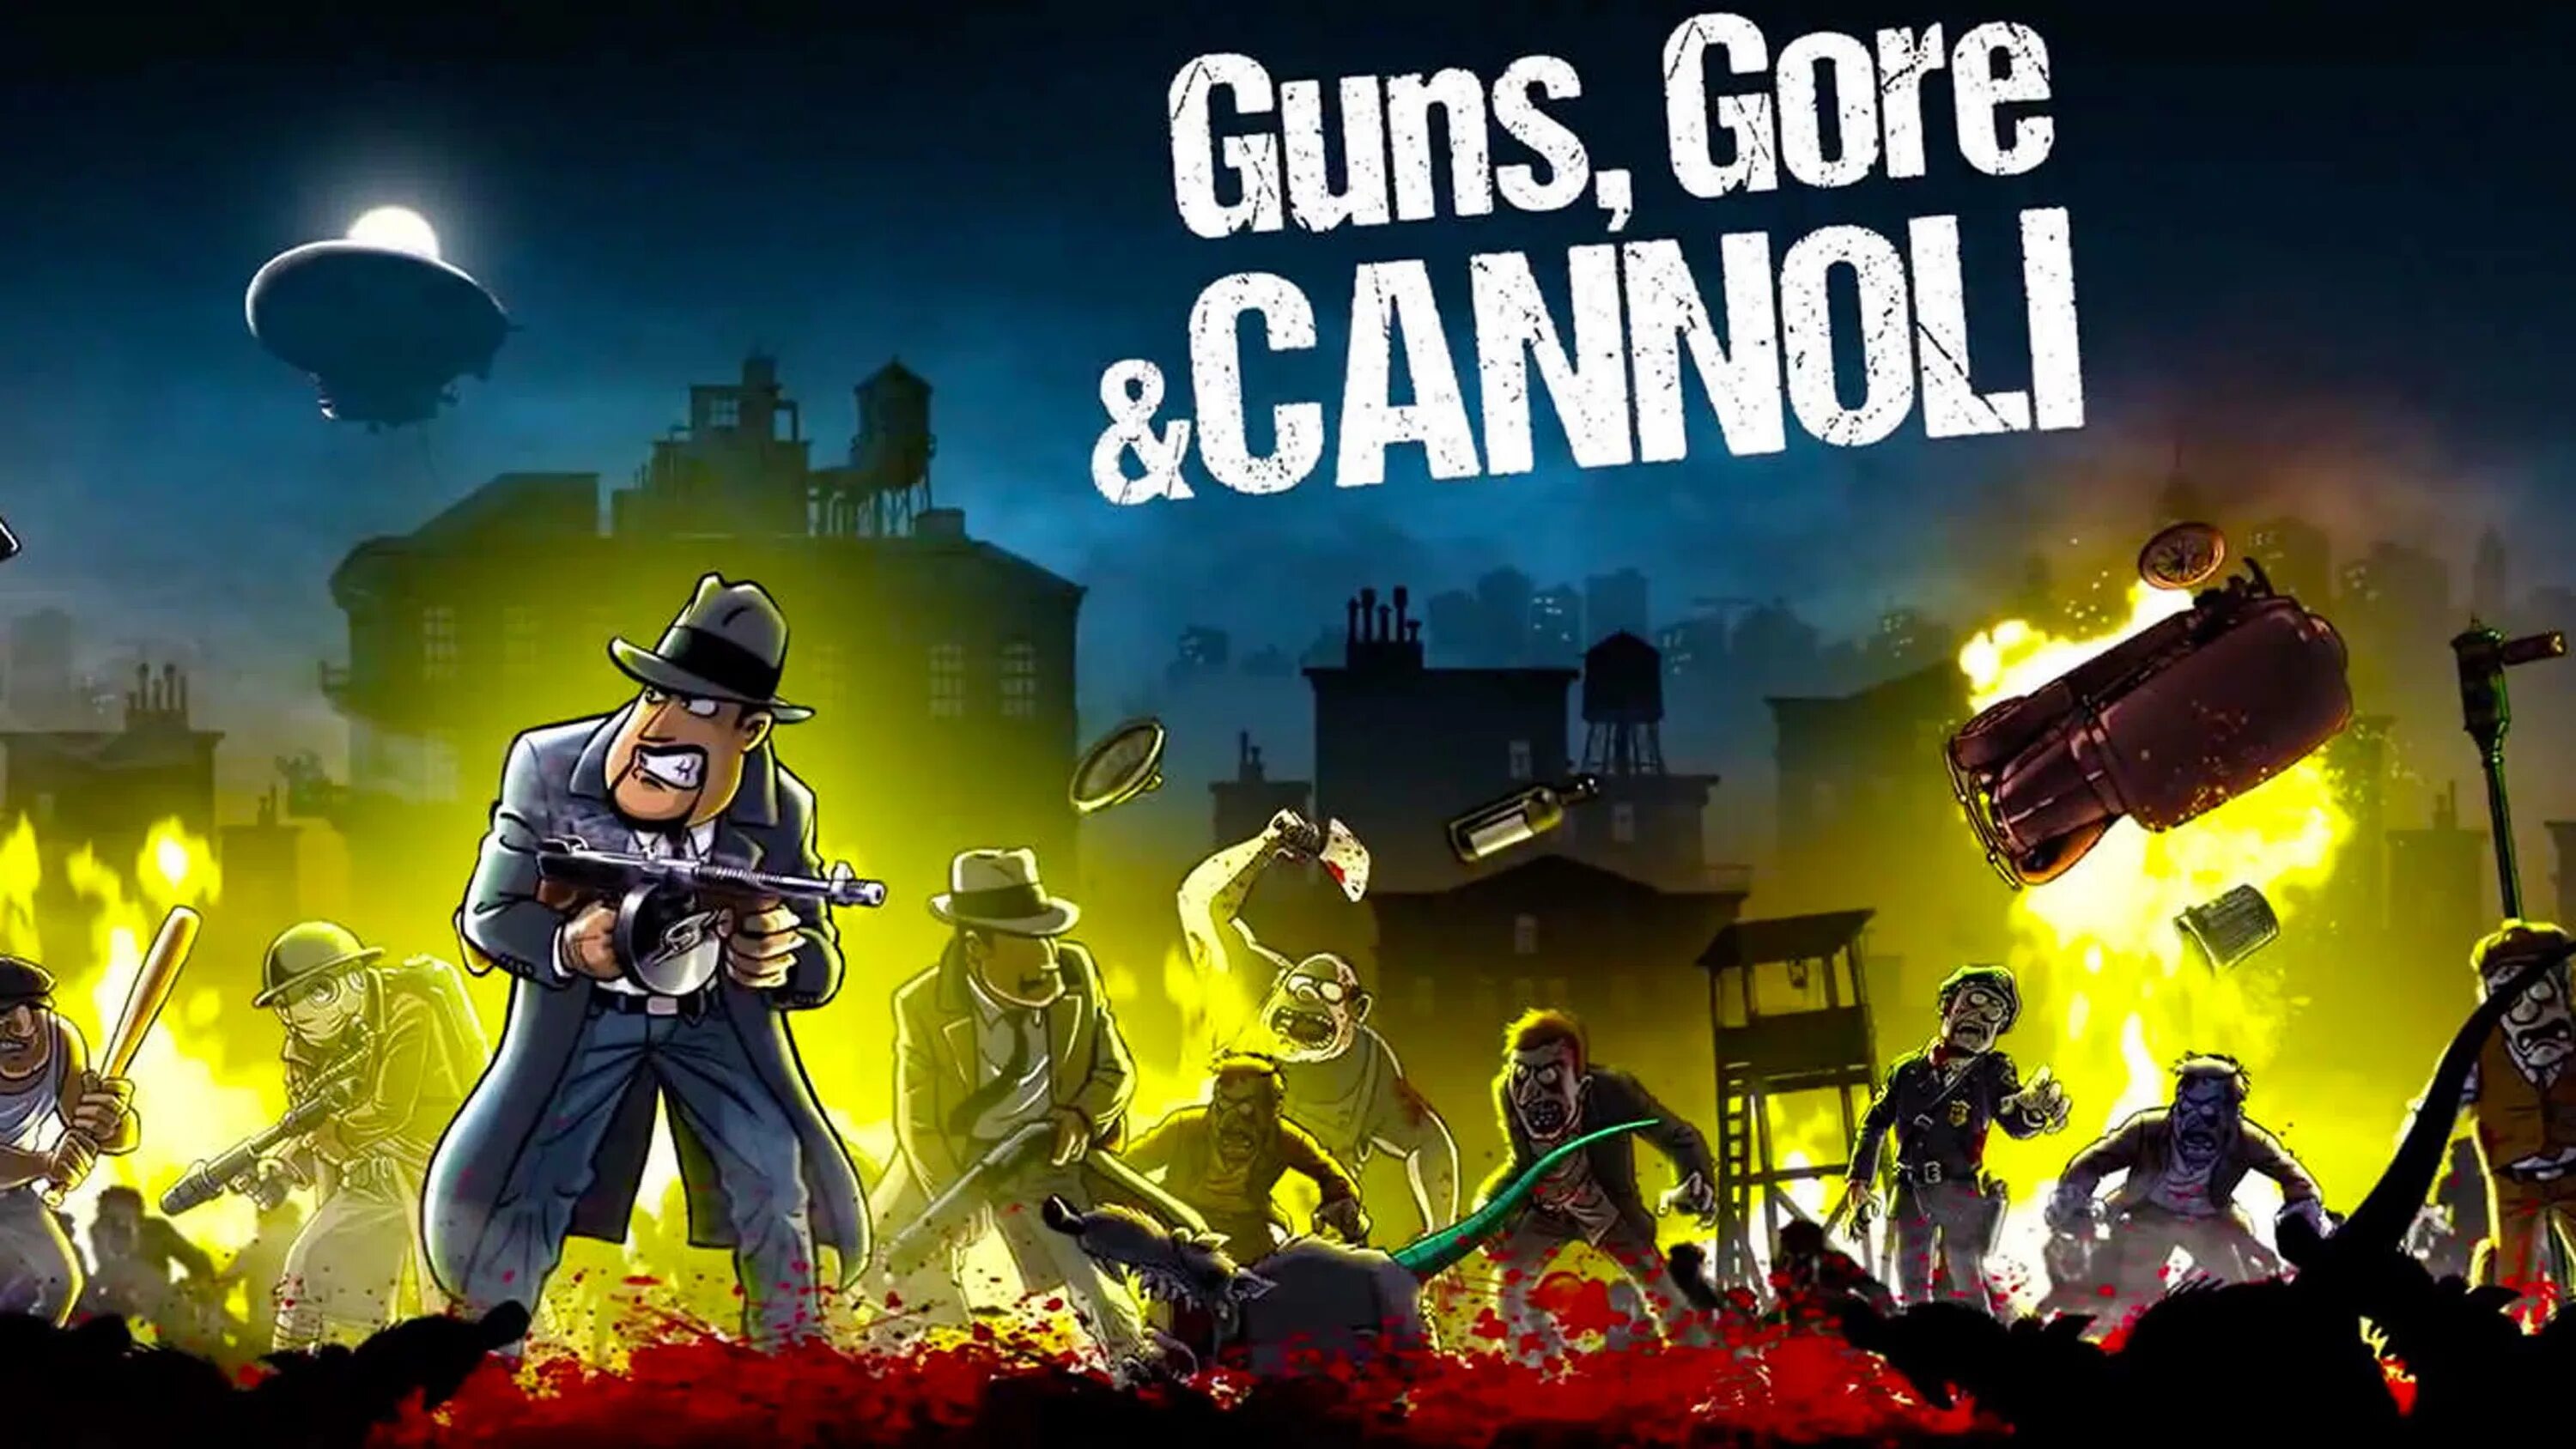 Guns core. Guns Gore Cannoli Cannoli. Guns Gore and Cannoli Винни. Guns Core Cannoli 1. Guns Gore & Cannoli 2 Xbox one.